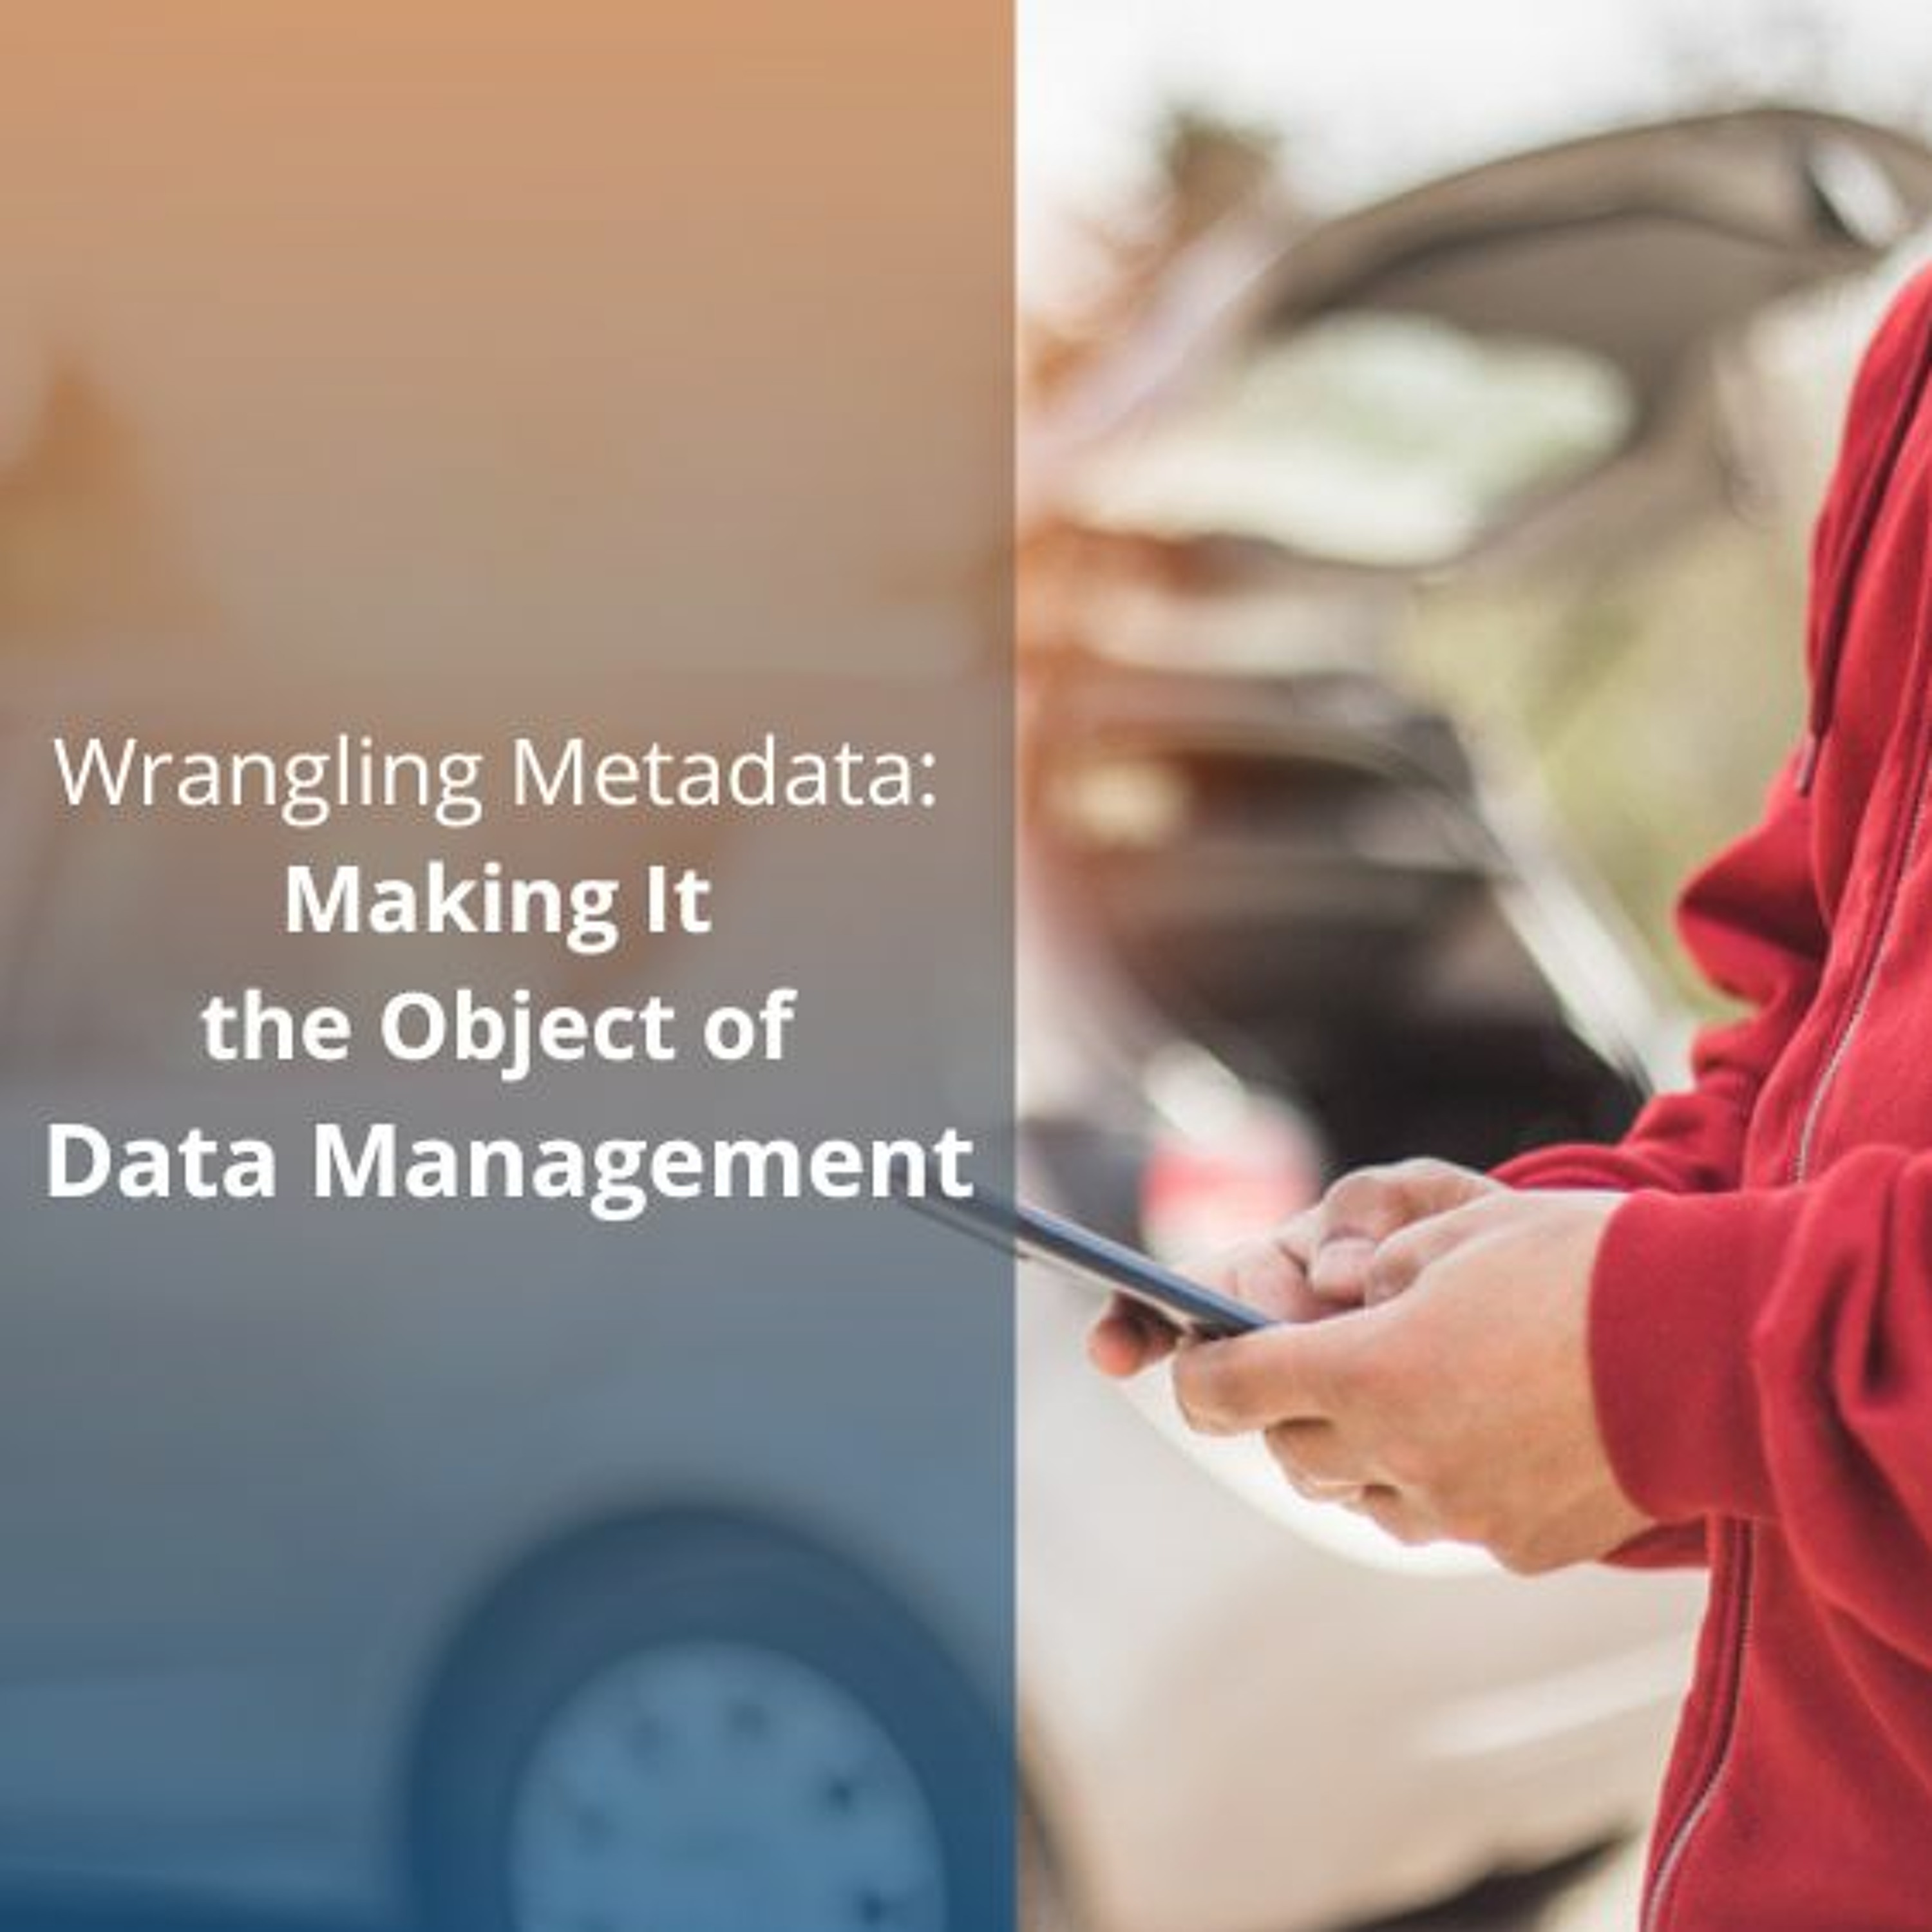 Wrangling Metadata: Making It the Object of Data Management - Audio Blog